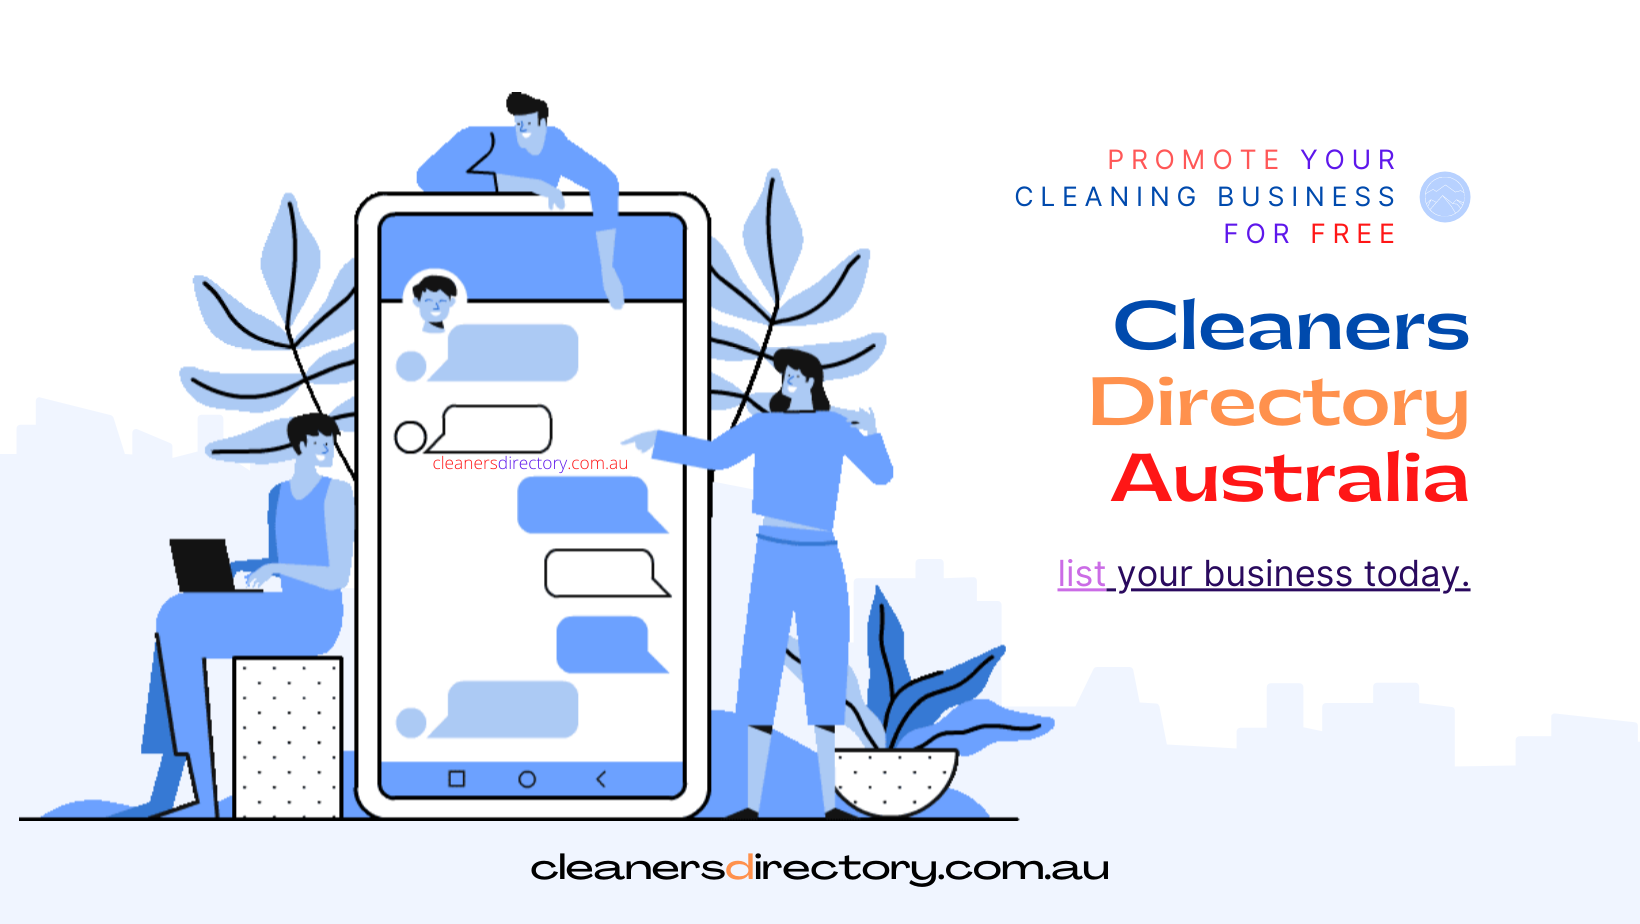 (c) Cleanersdirectory.com.au